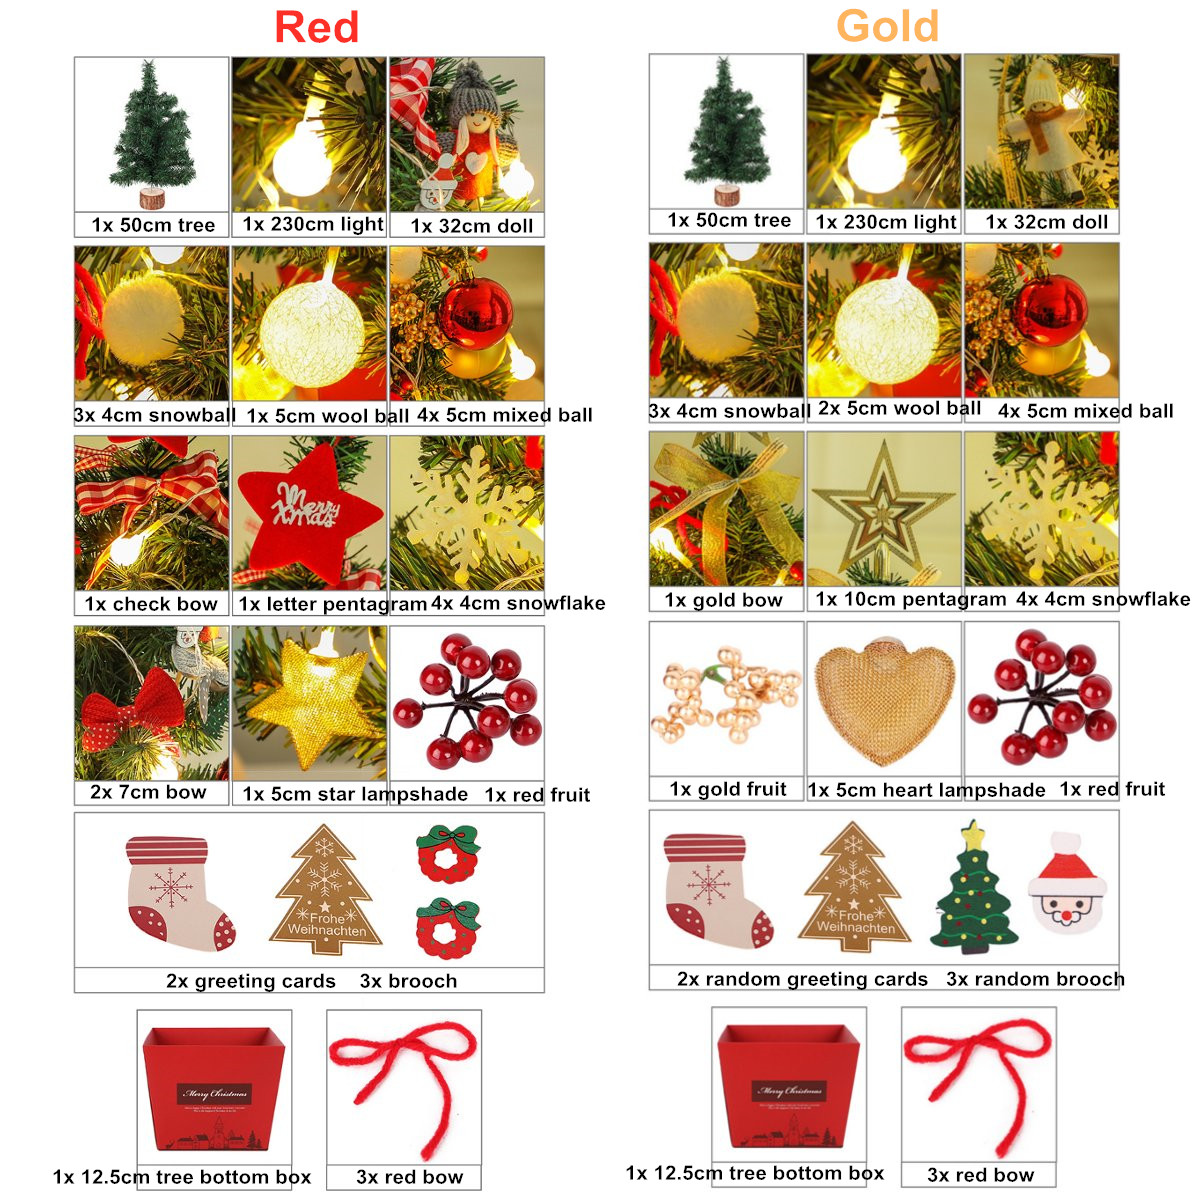 Mini-Christmas-Tree-Desktop-With-Lights-50CM-Golden-And-Red-Christmas-Tree-Set-1754483-2